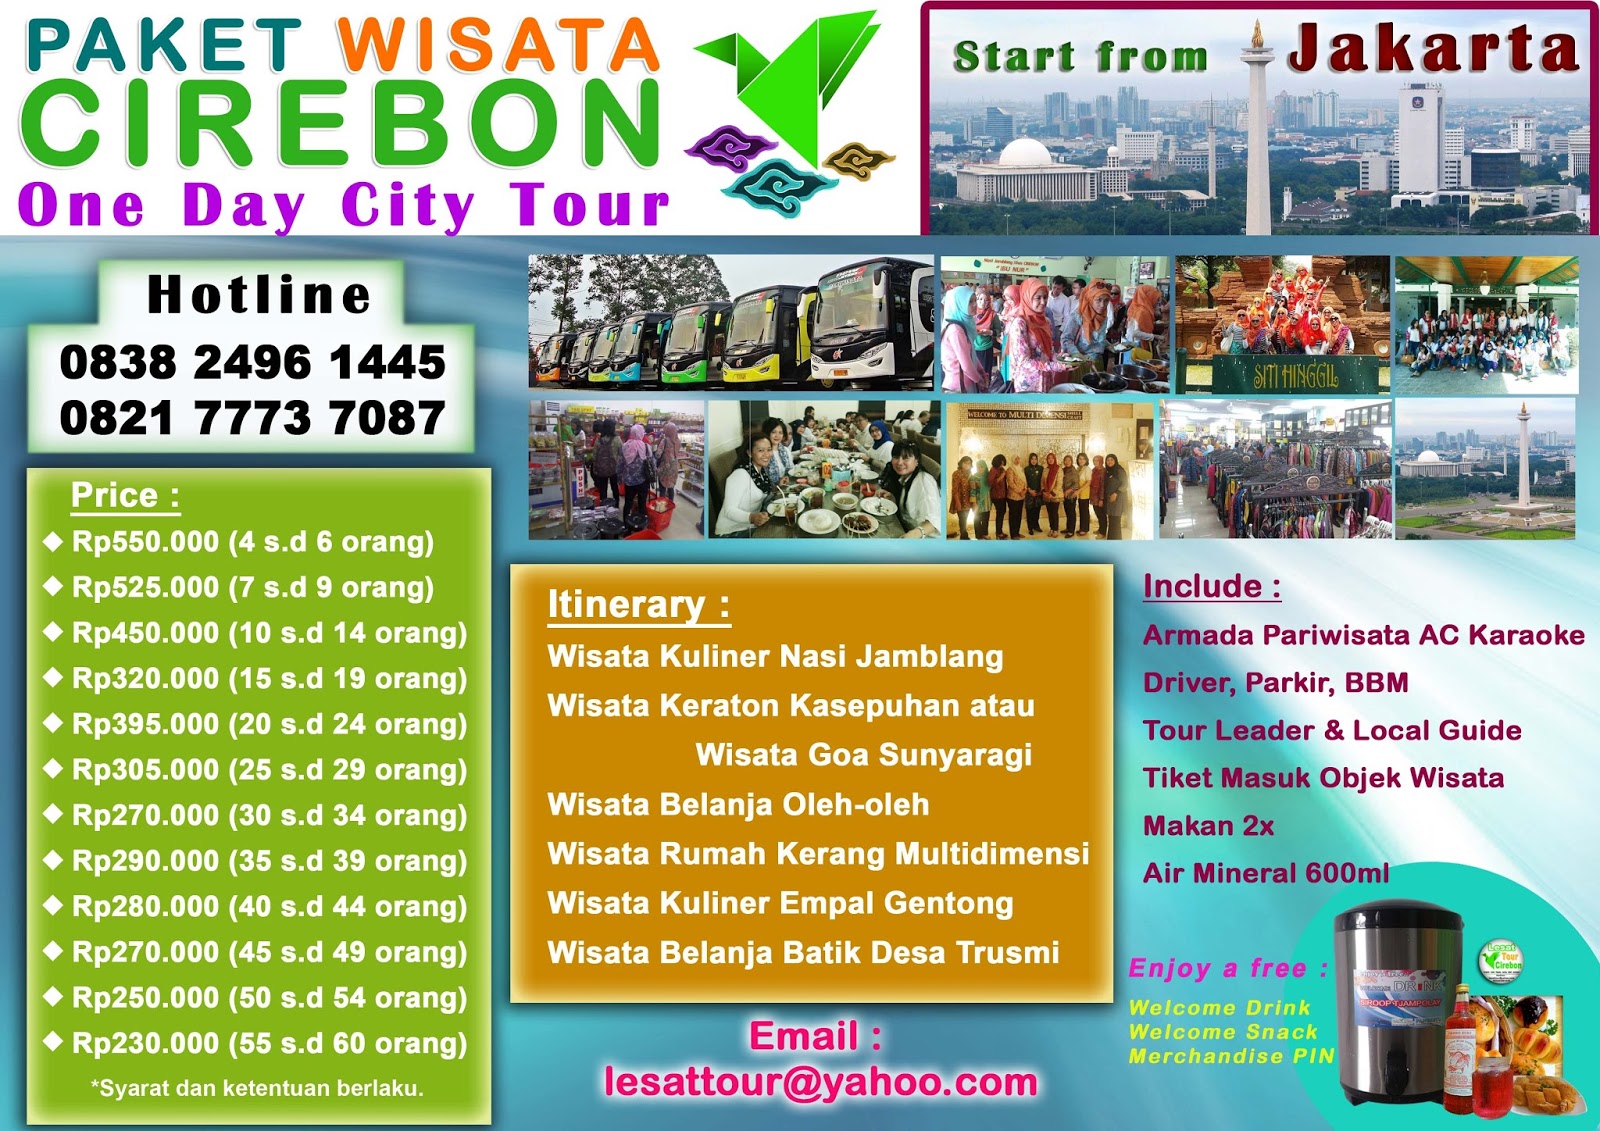 LESAT TOUR CIREBON - Paket Wisata Cirebon Kuningan